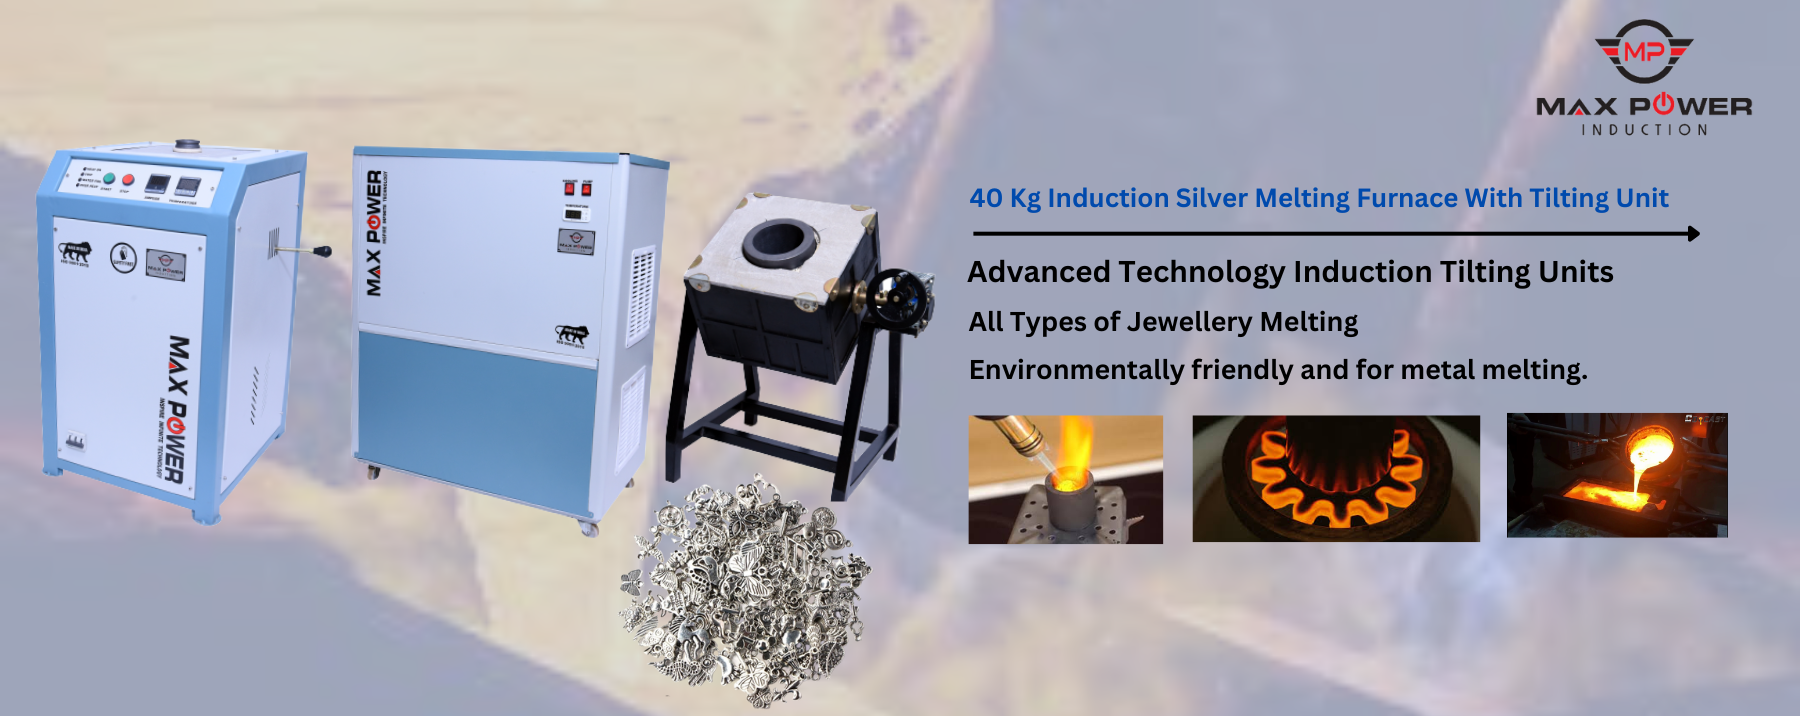 40 Kg Induction Silver Melting Furnace With Tilting Unit